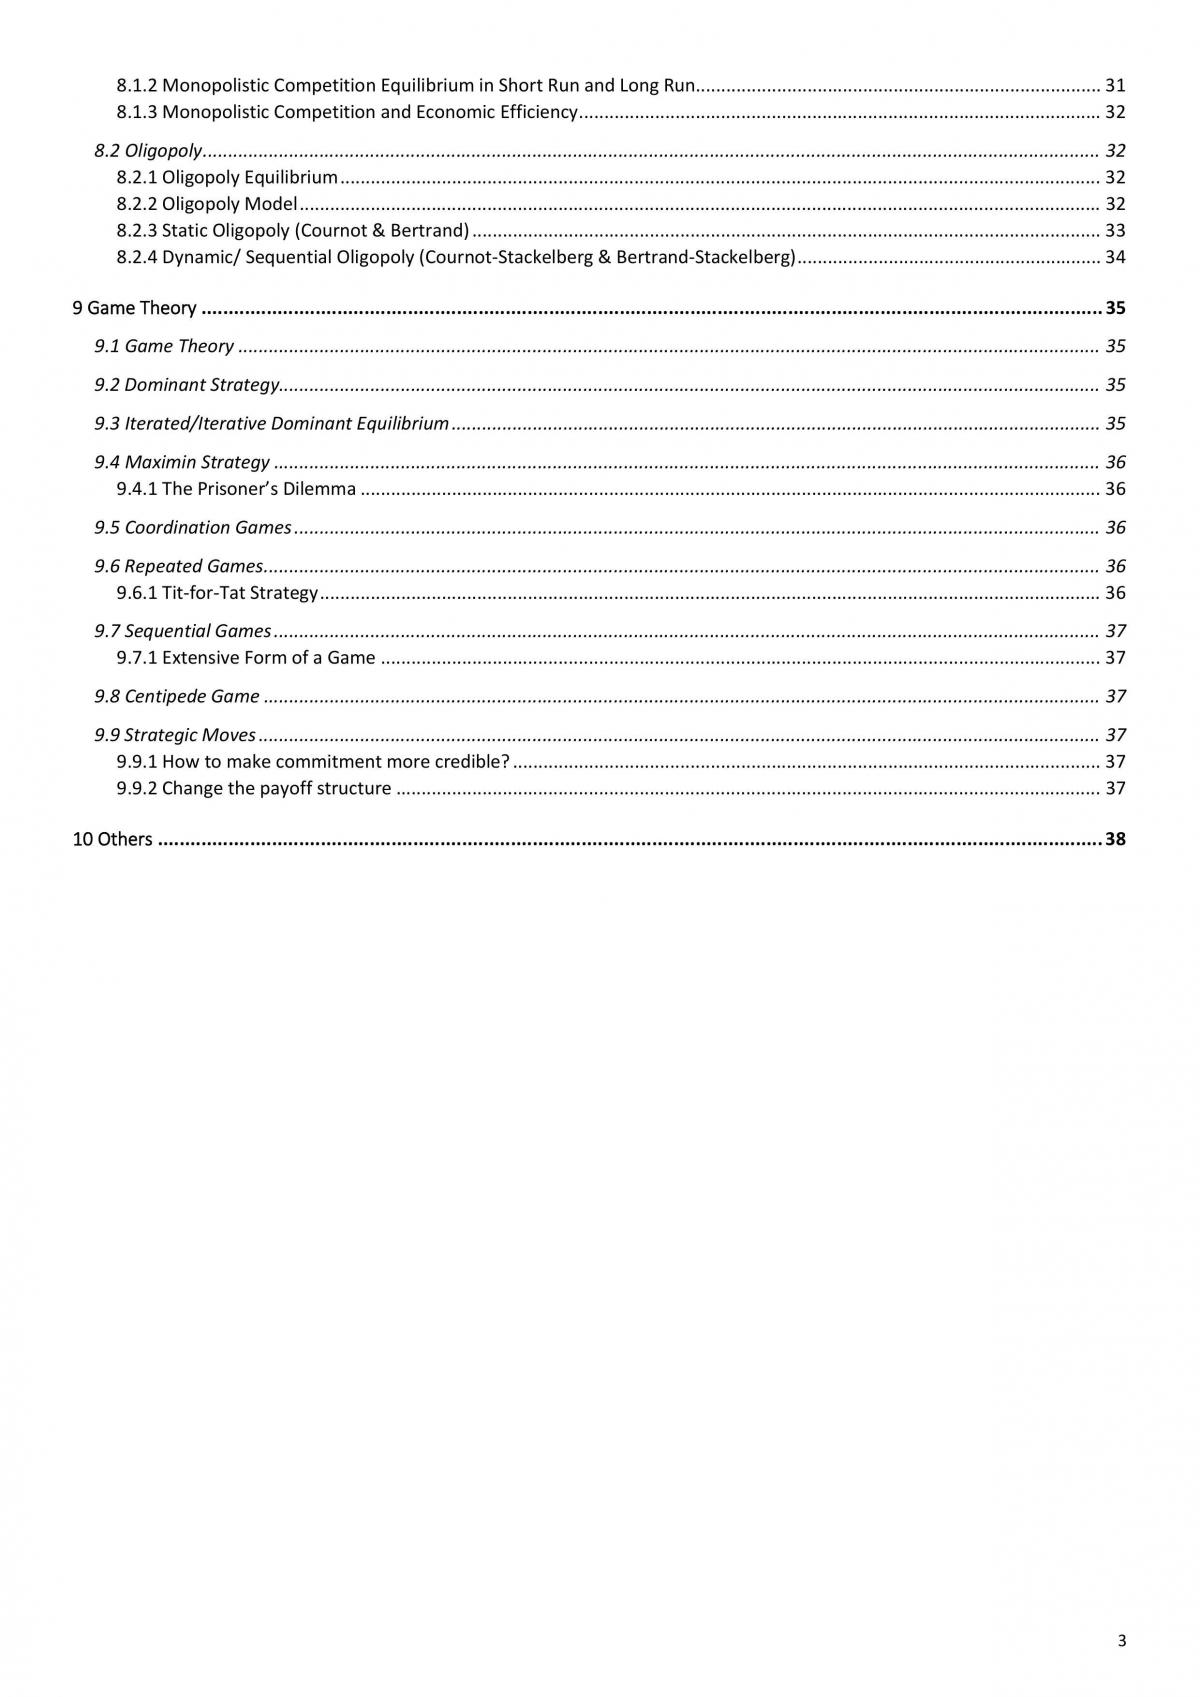 BSP1703 Managerial Economics Full Exam Notes - Page 3